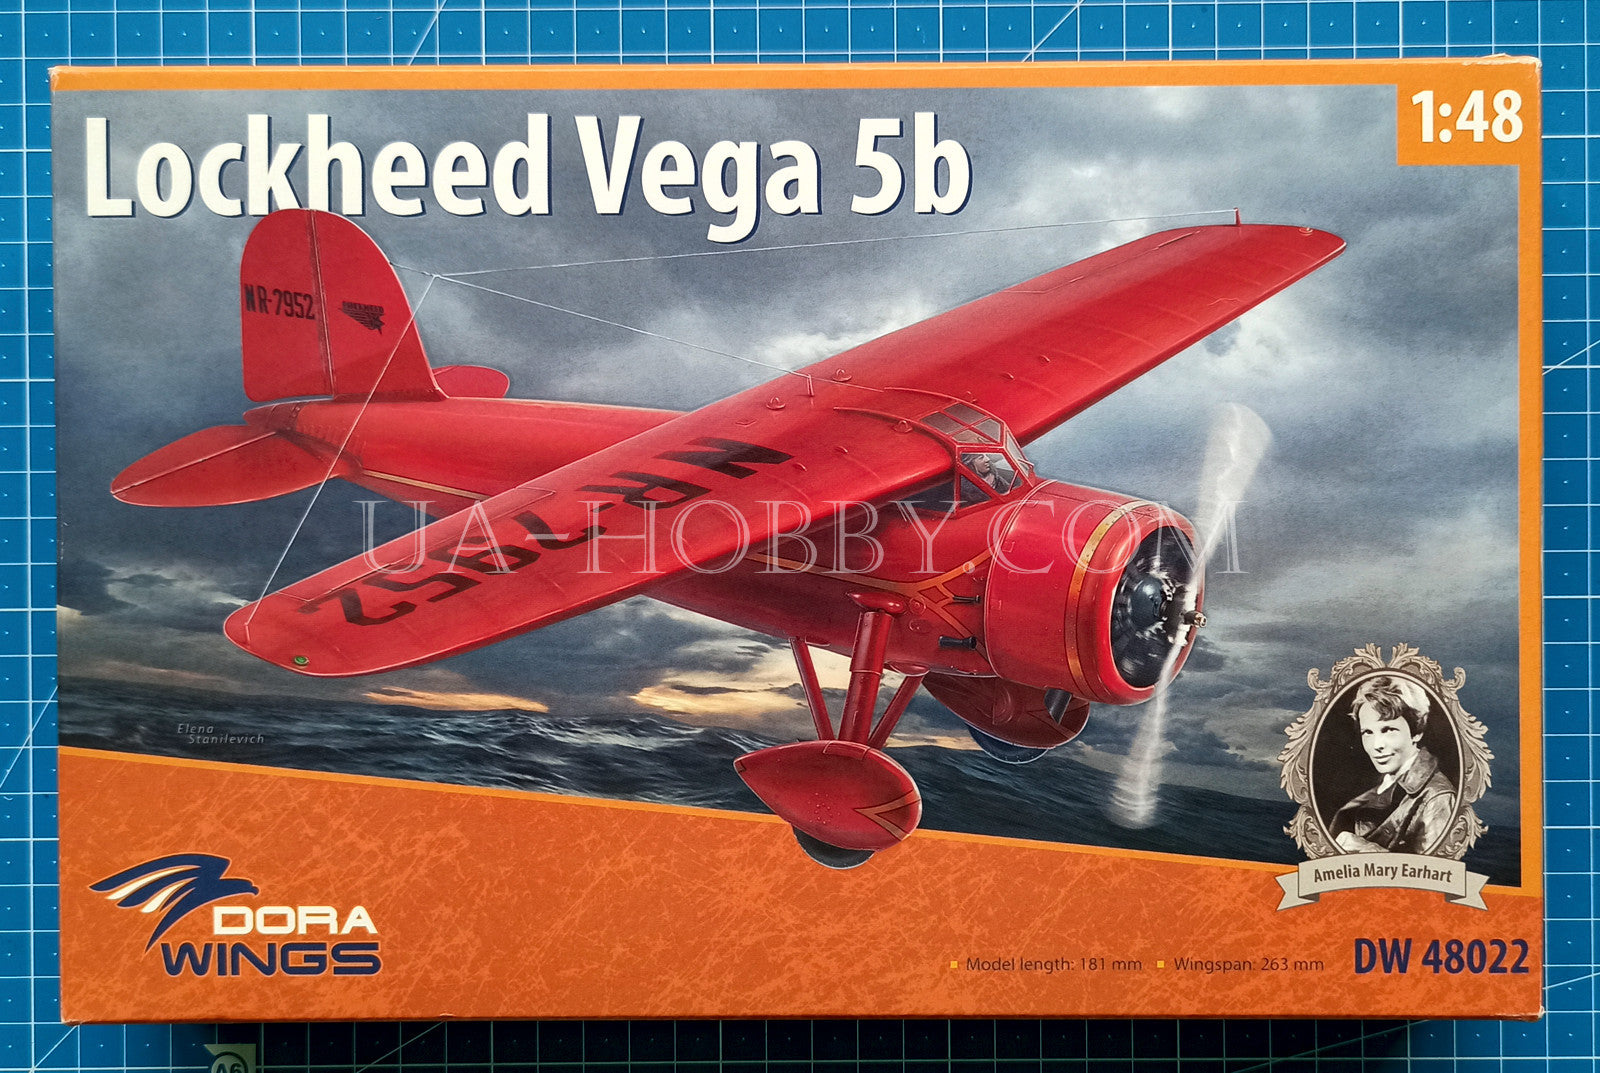 1/48 Lockheed Vega 5b Record Flights. Dora Wings DW 48022